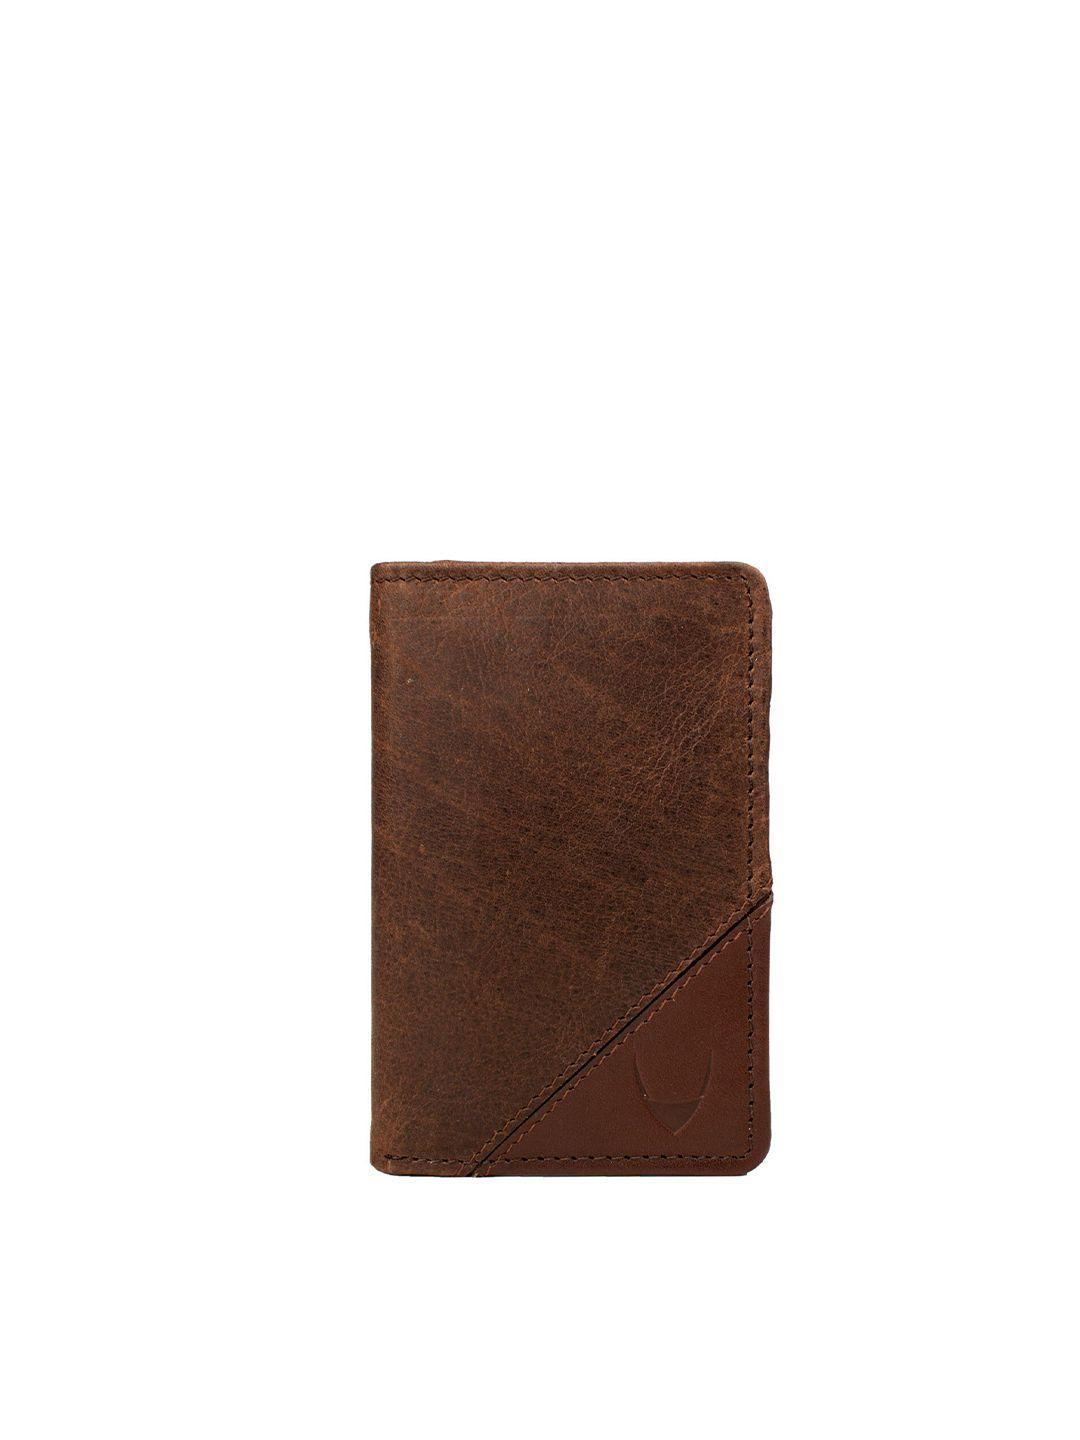 hidesign men brown textured leather three fold wallet